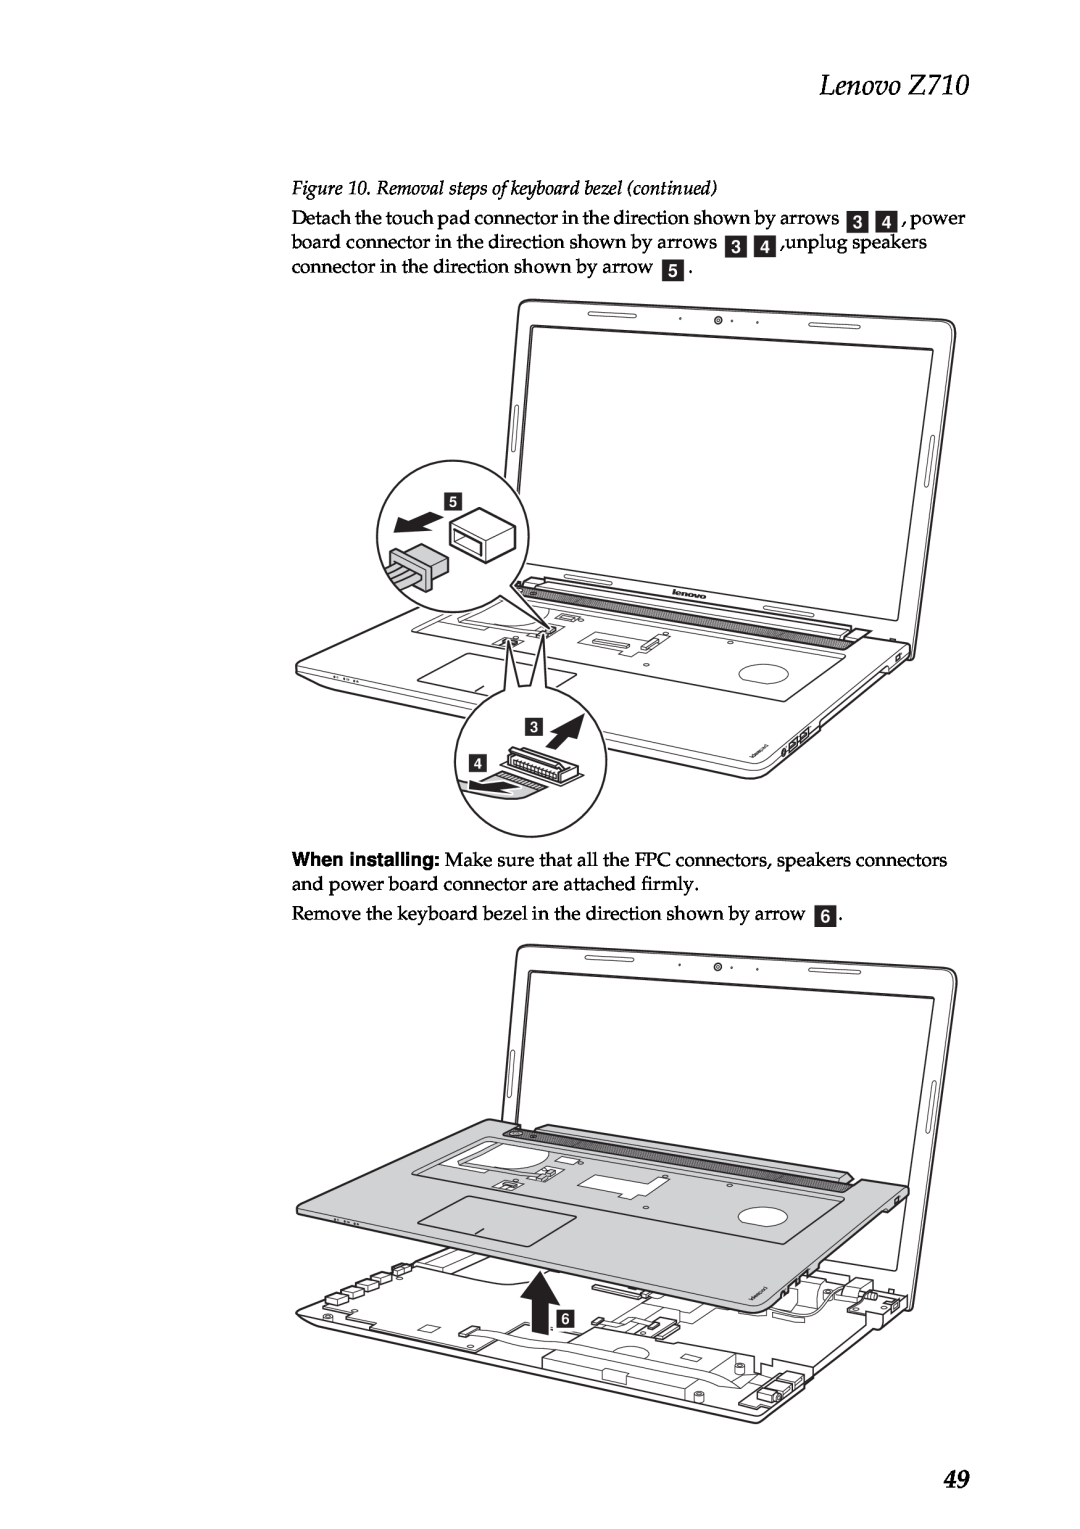 Lenovo manual Lenovo Z710, Removal steps of keyboard bezel continued 